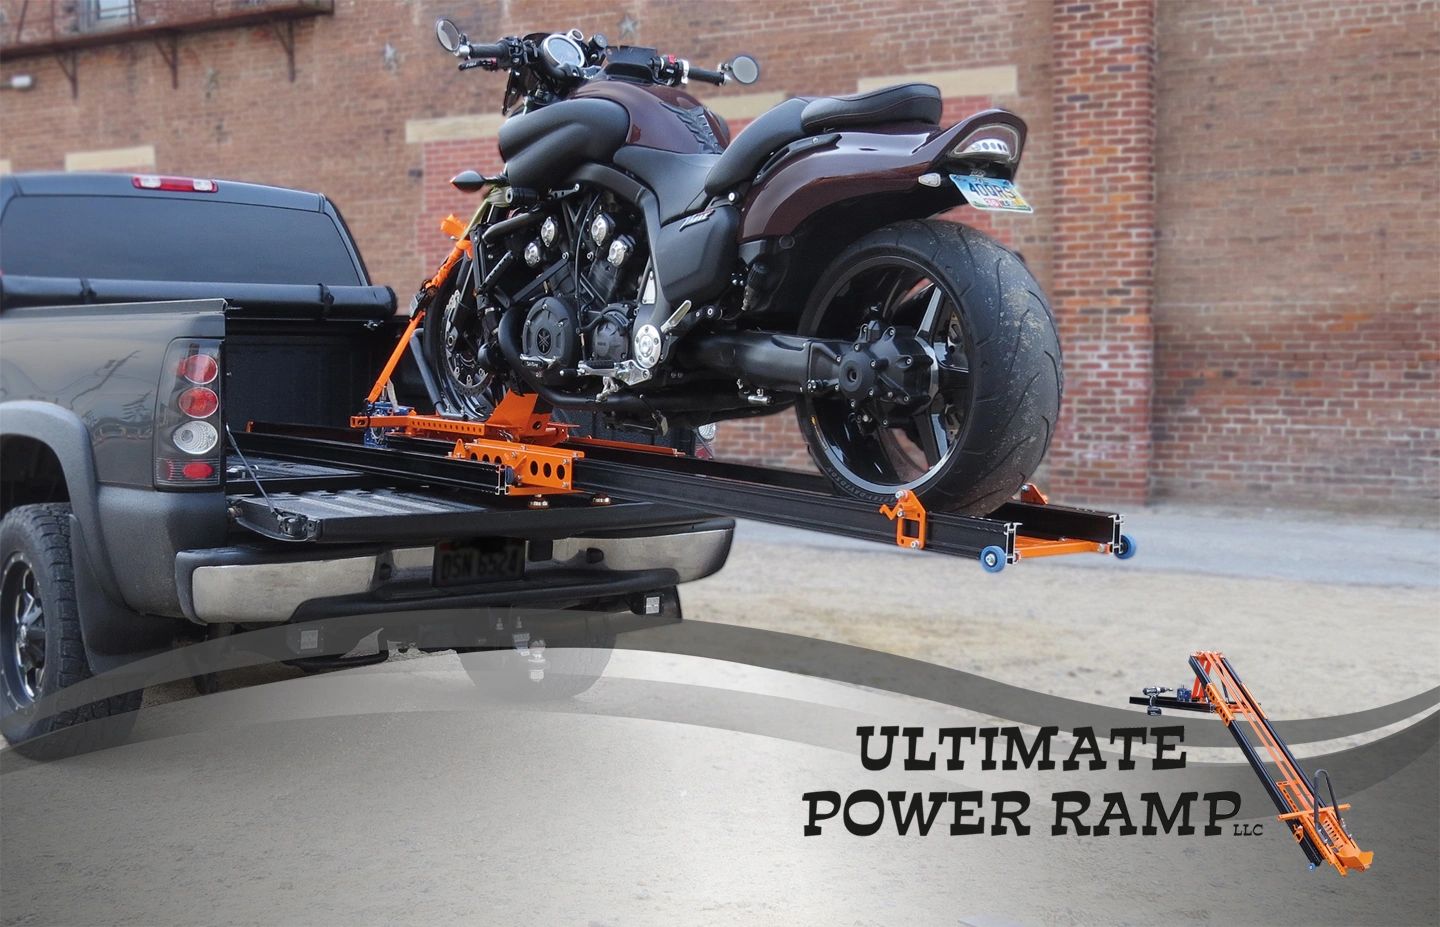 Ultimate Power Ramp - Motorcycle Loading, Motorcycle Hauling